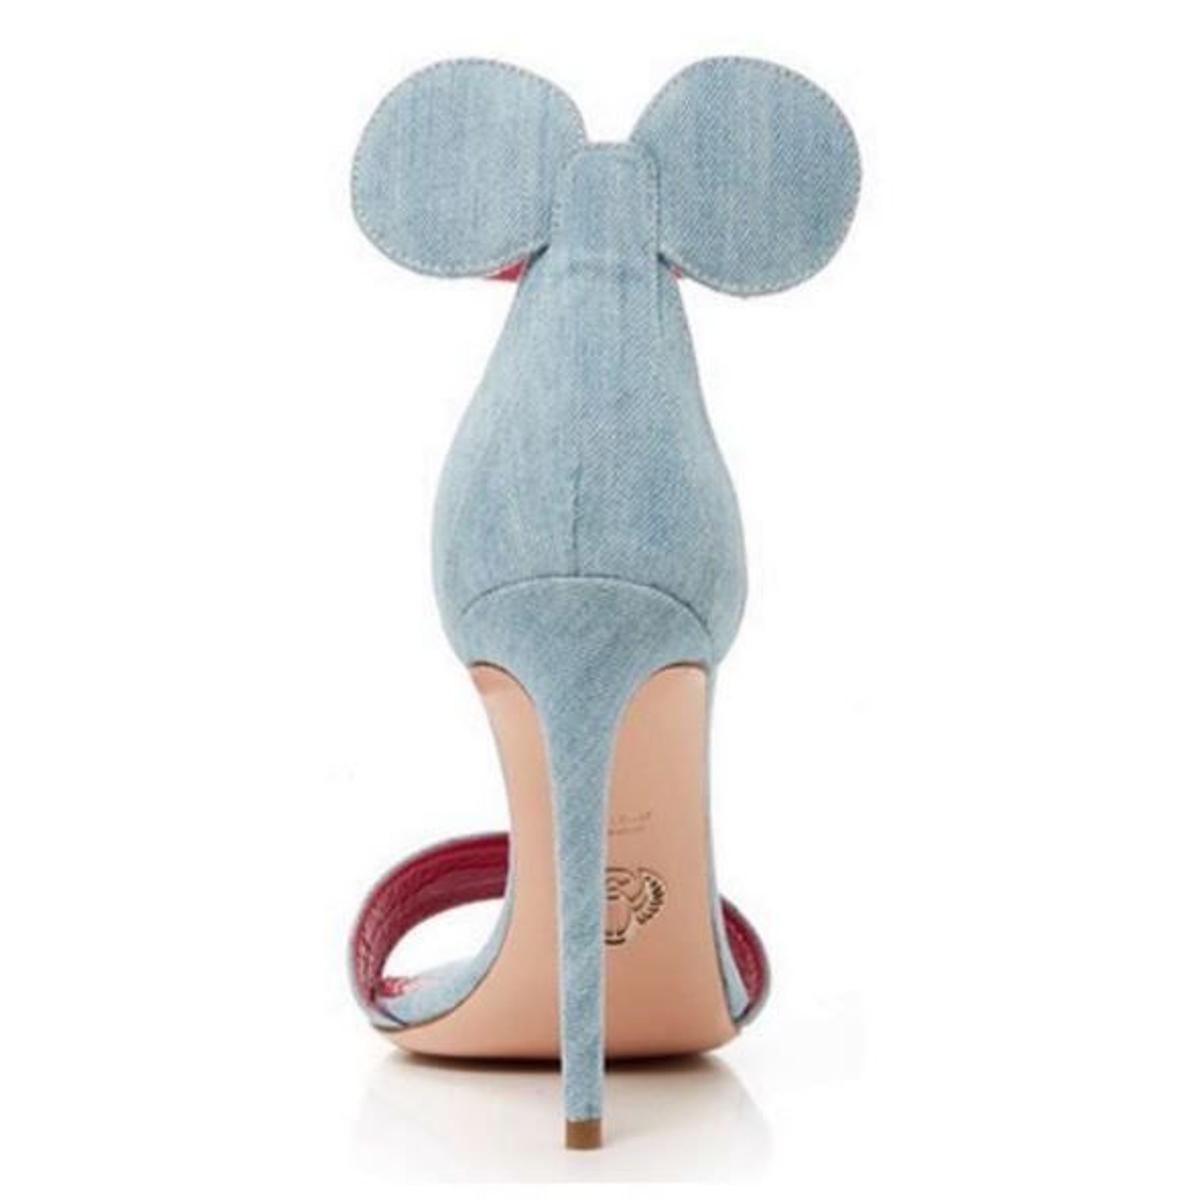 Las sandalias 'Minnie' que triunfan en instagram